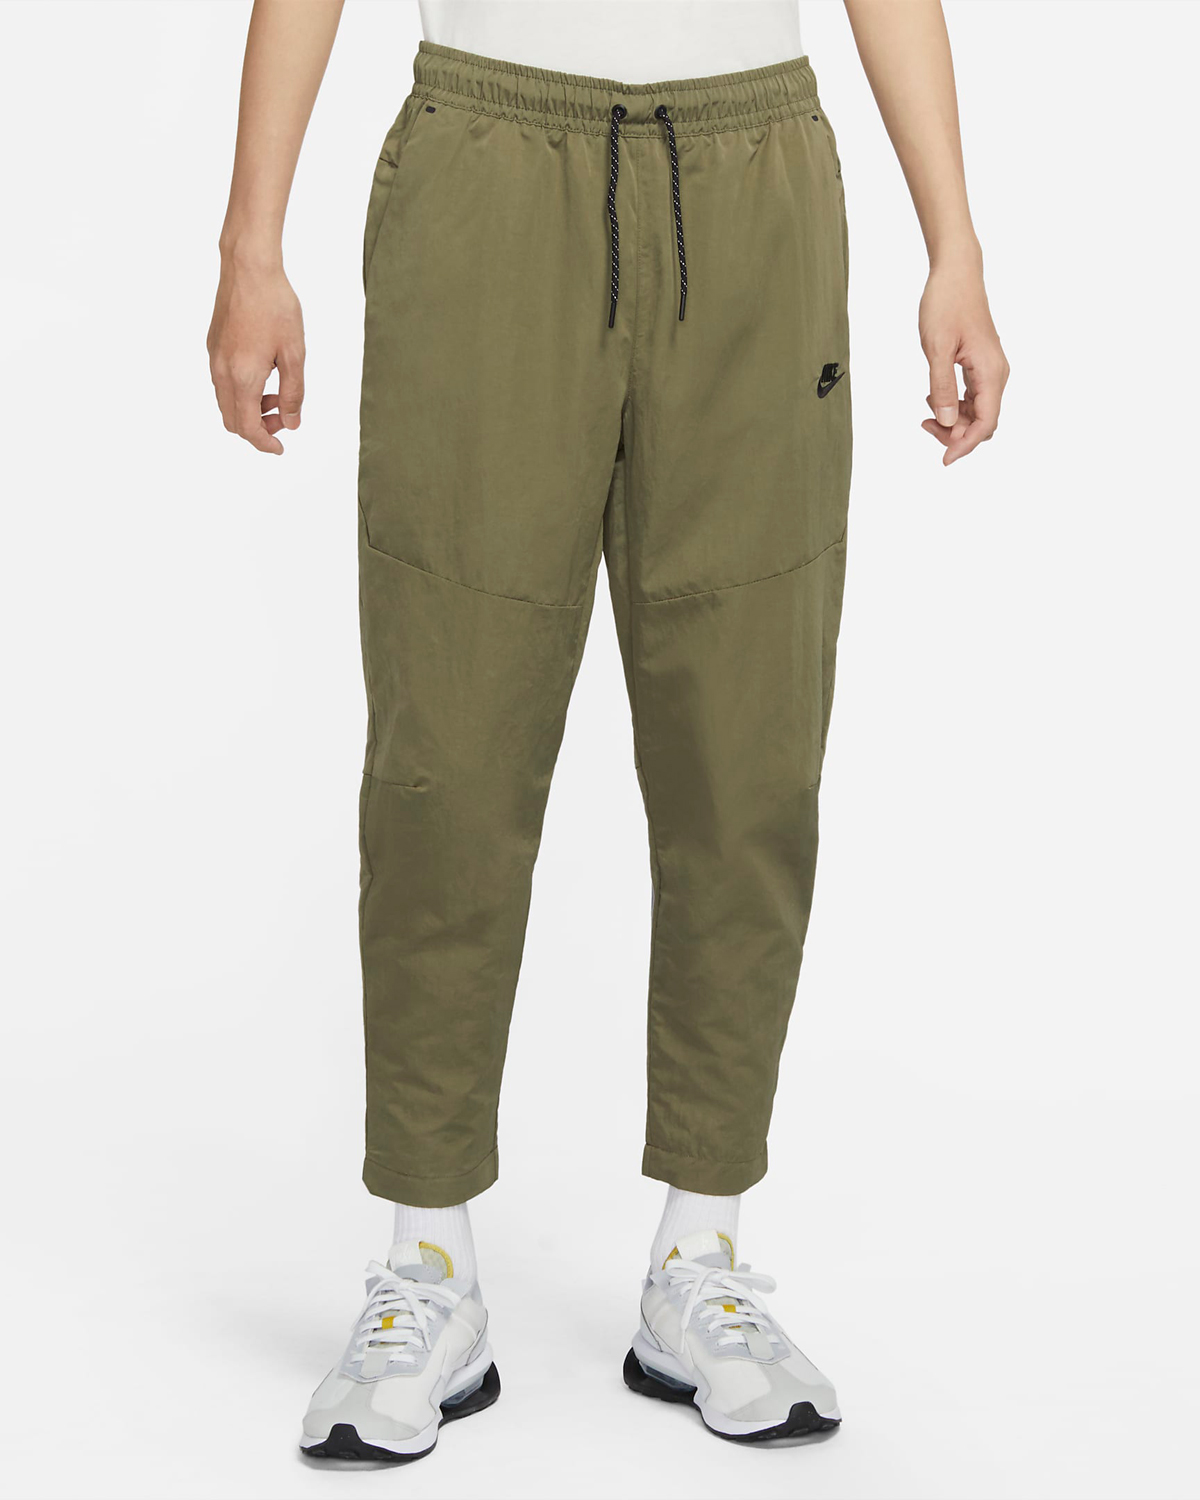 Nike-Sportswear-Tech-Essentials-Commuter-Pants-Medium-Olive-1